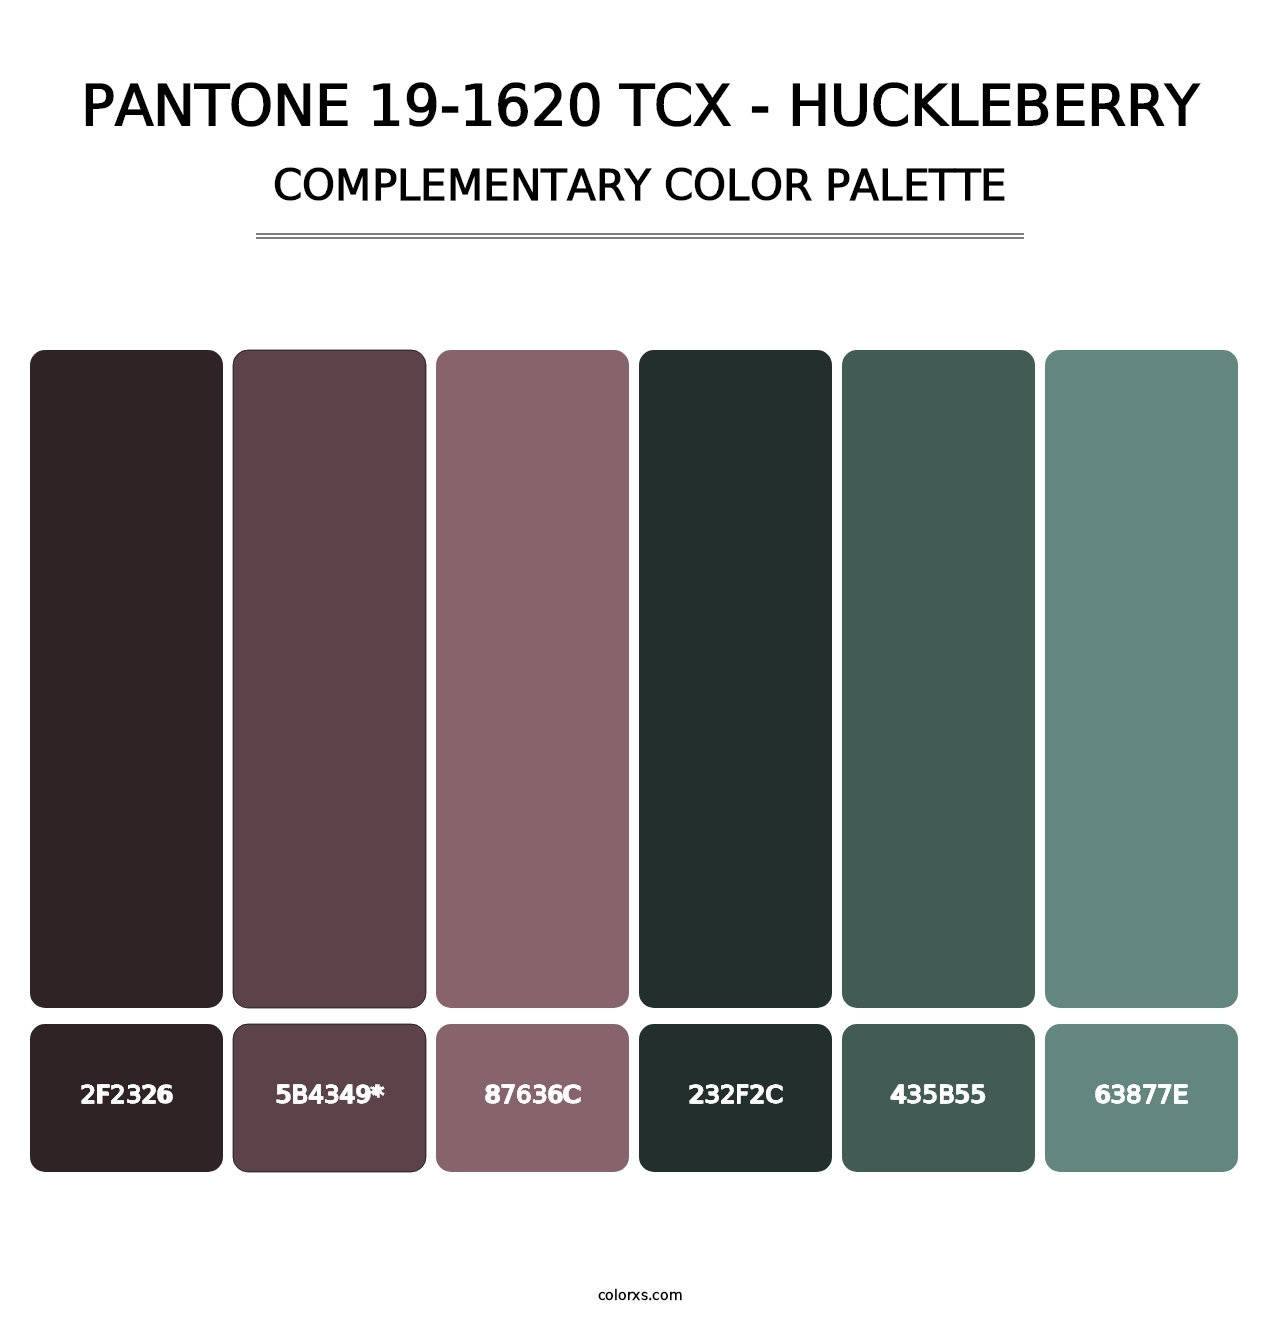 PANTONE 19-1620 TCX - Huckleberry - Complementary Color Palette